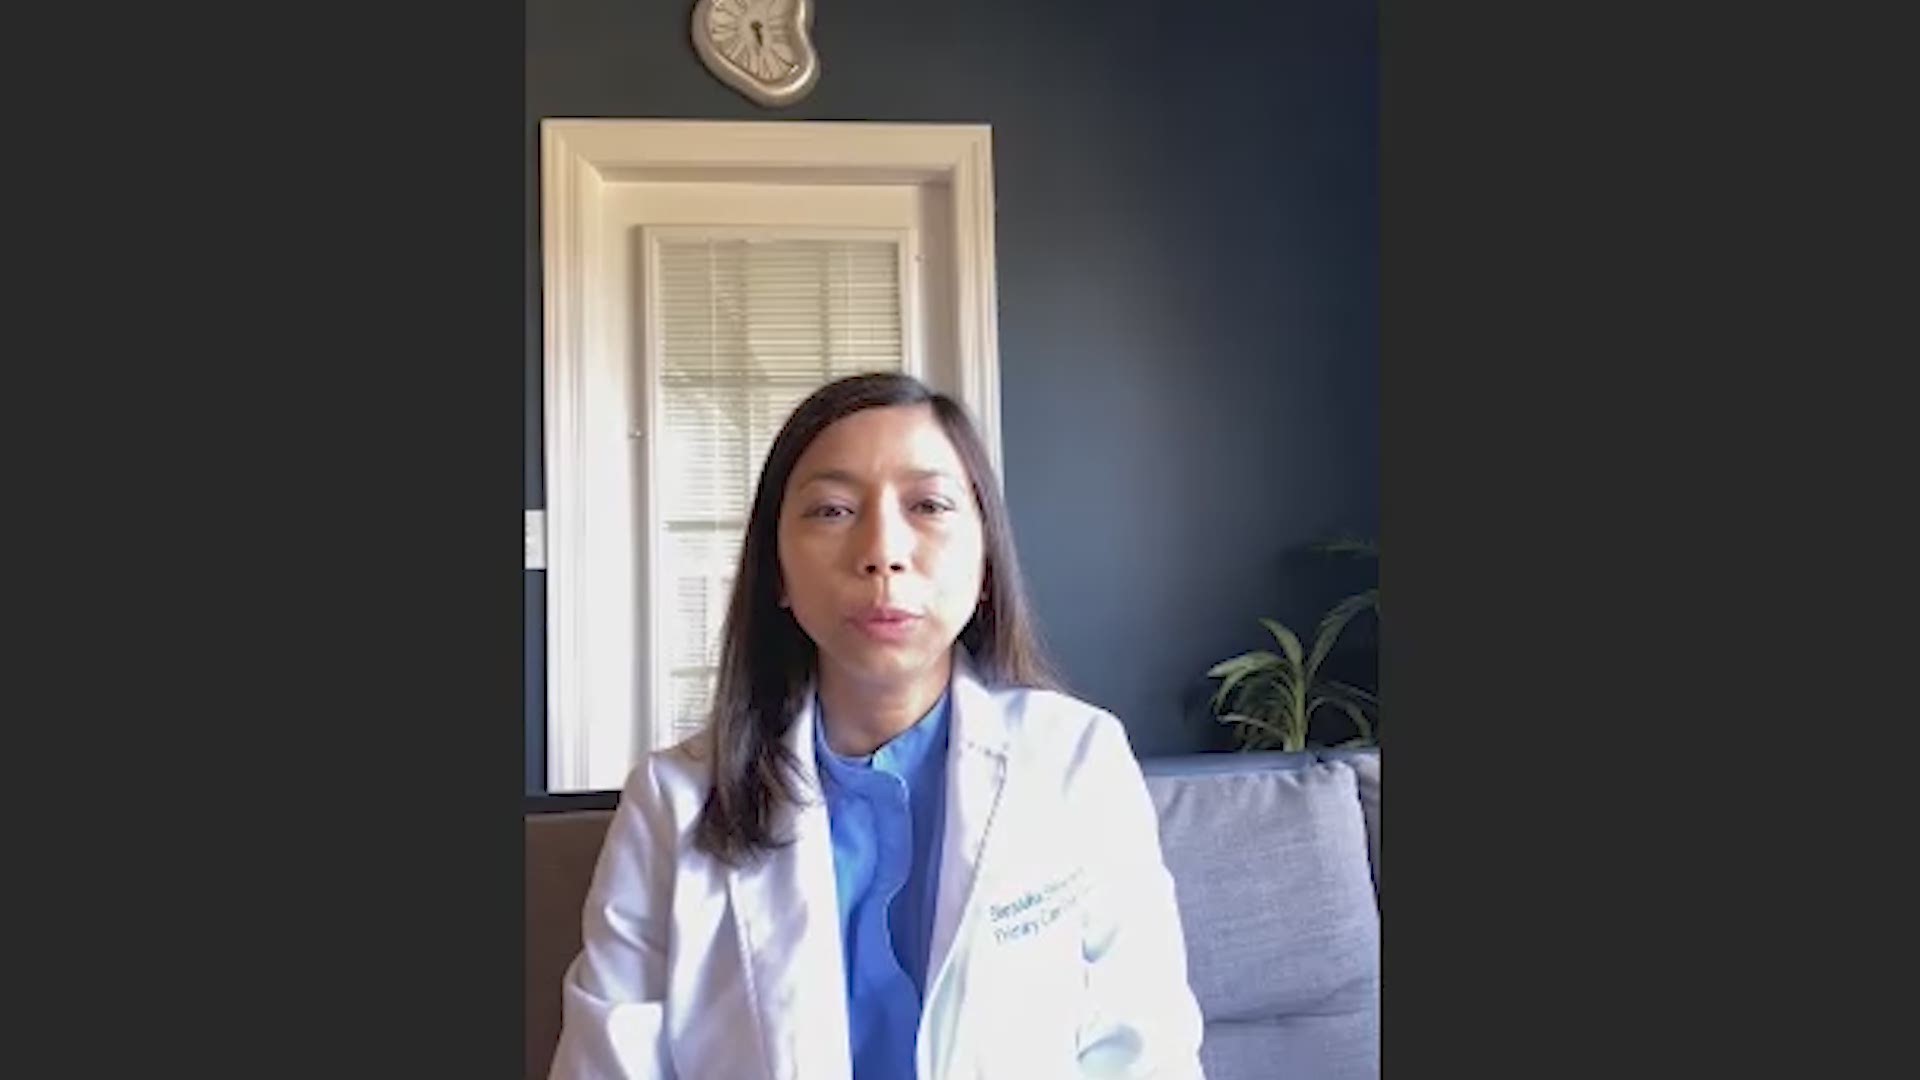 Harvest pediatrician Dr. Shraddah Shrestha weighs in on mask mandate expiration.